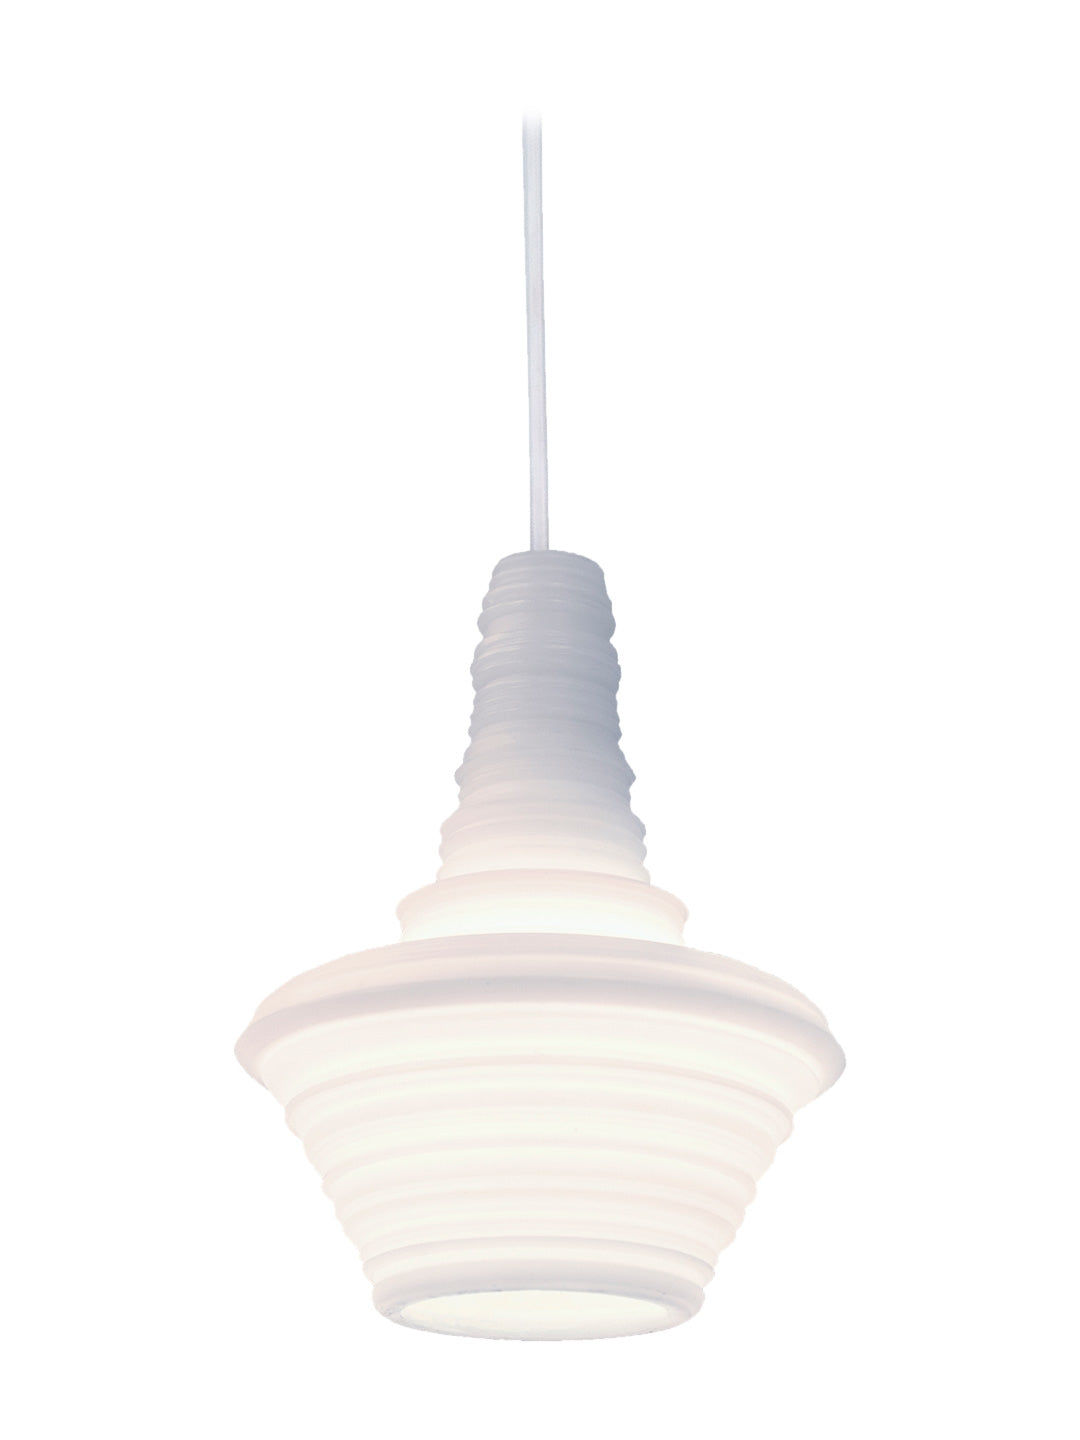 Innermost Lighting Stupa Pendant